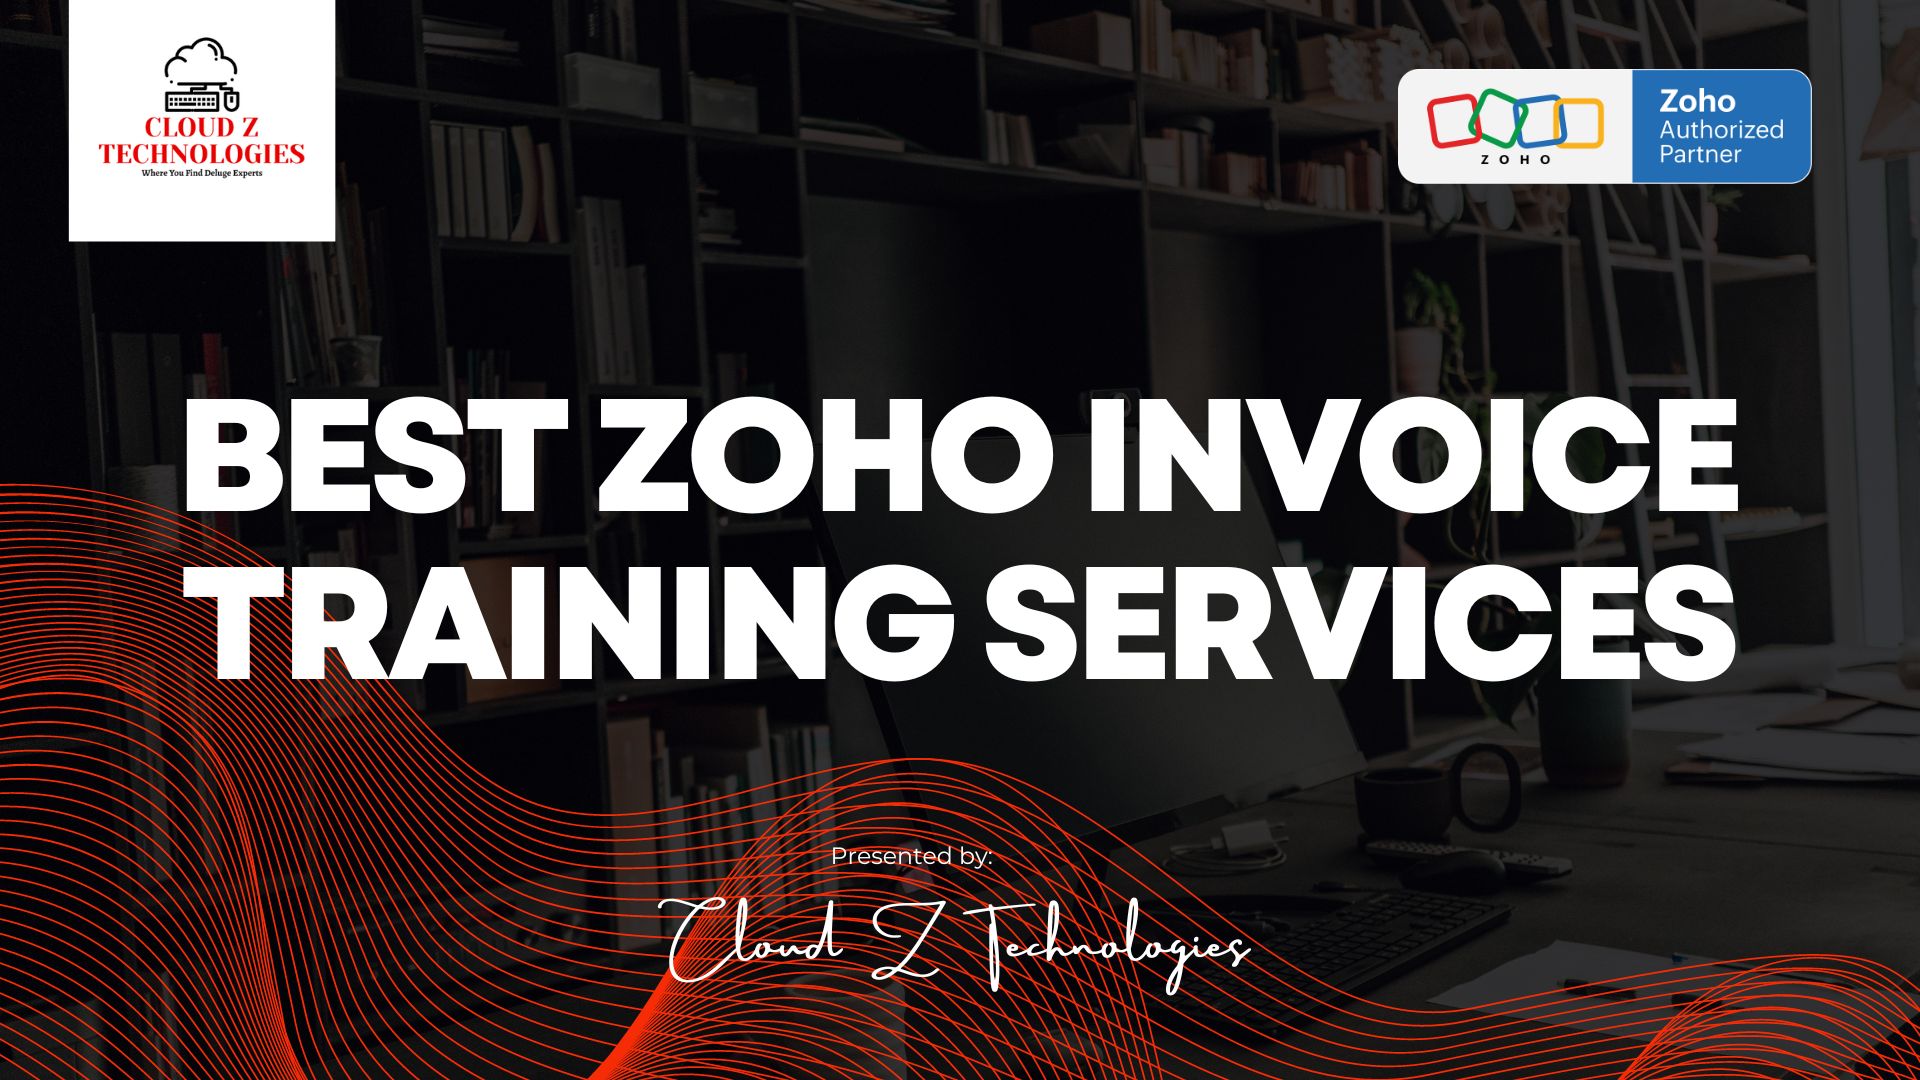 Zoho Invoice training services